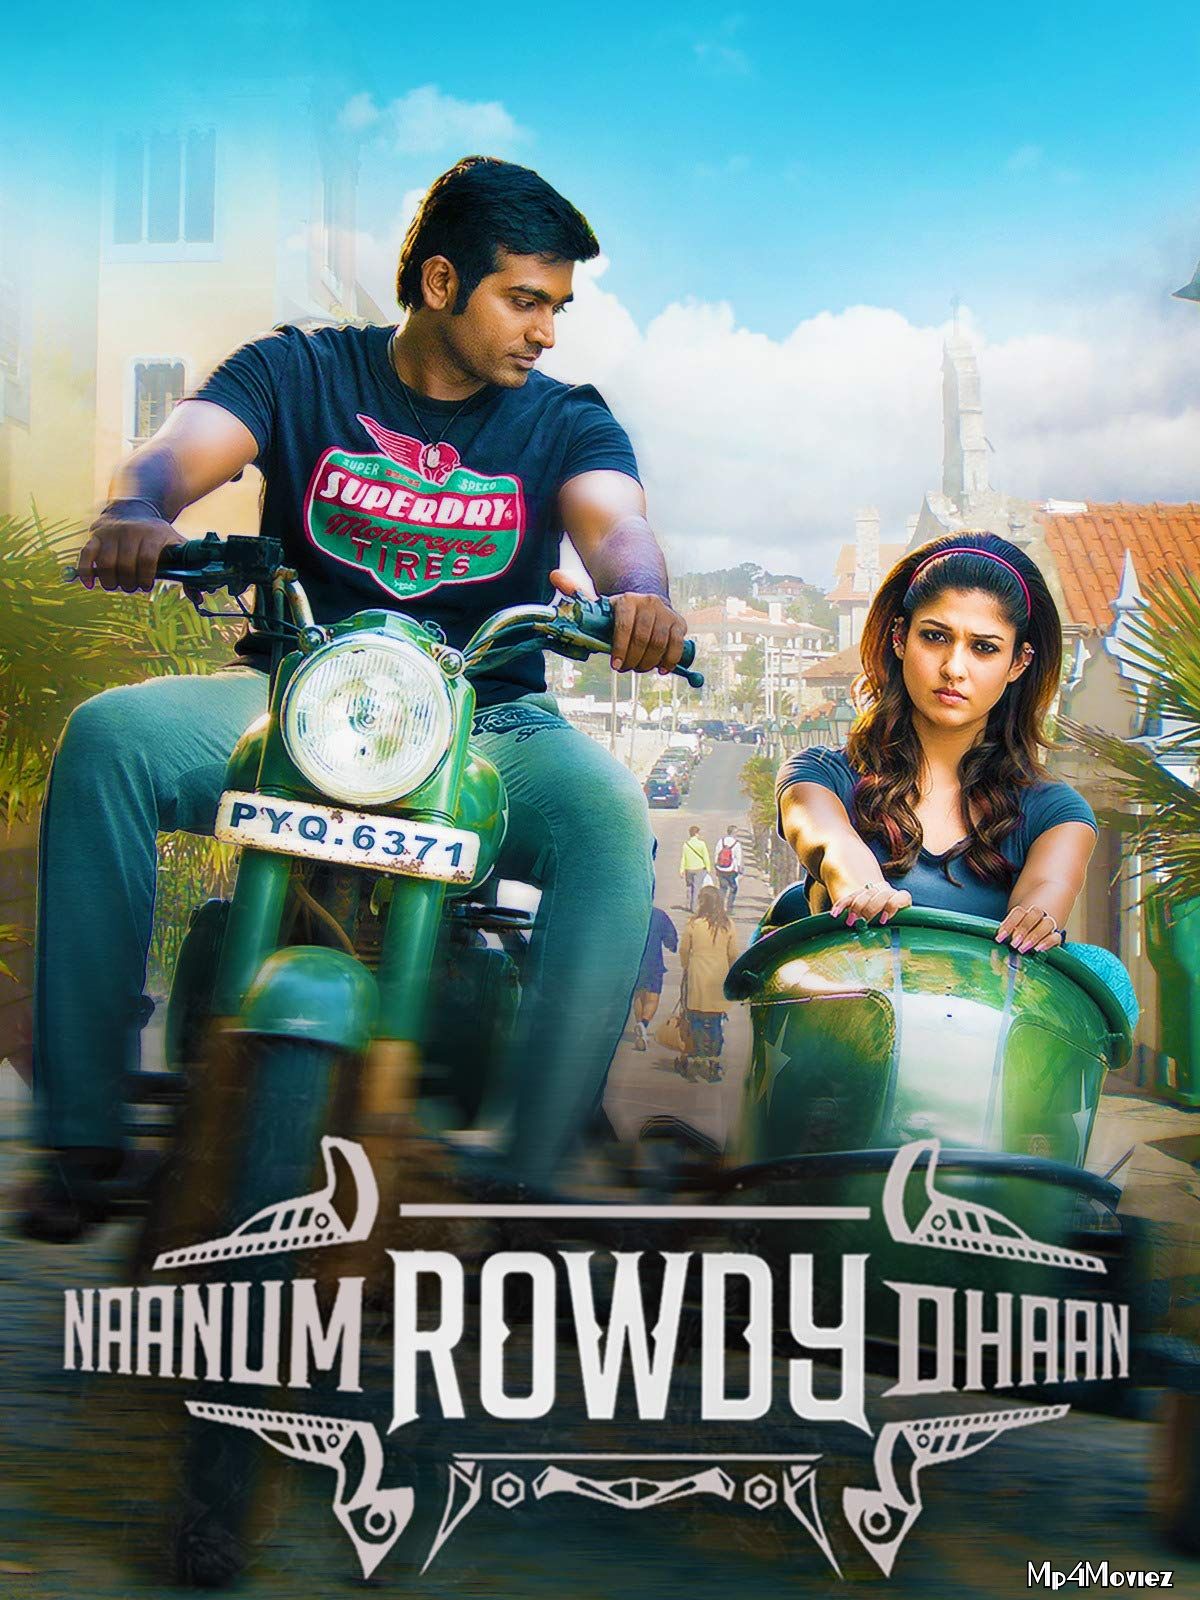 Naanum Rowdy Thaan 2015 UNCUT Hindi Dubbed Full Movie download full movie